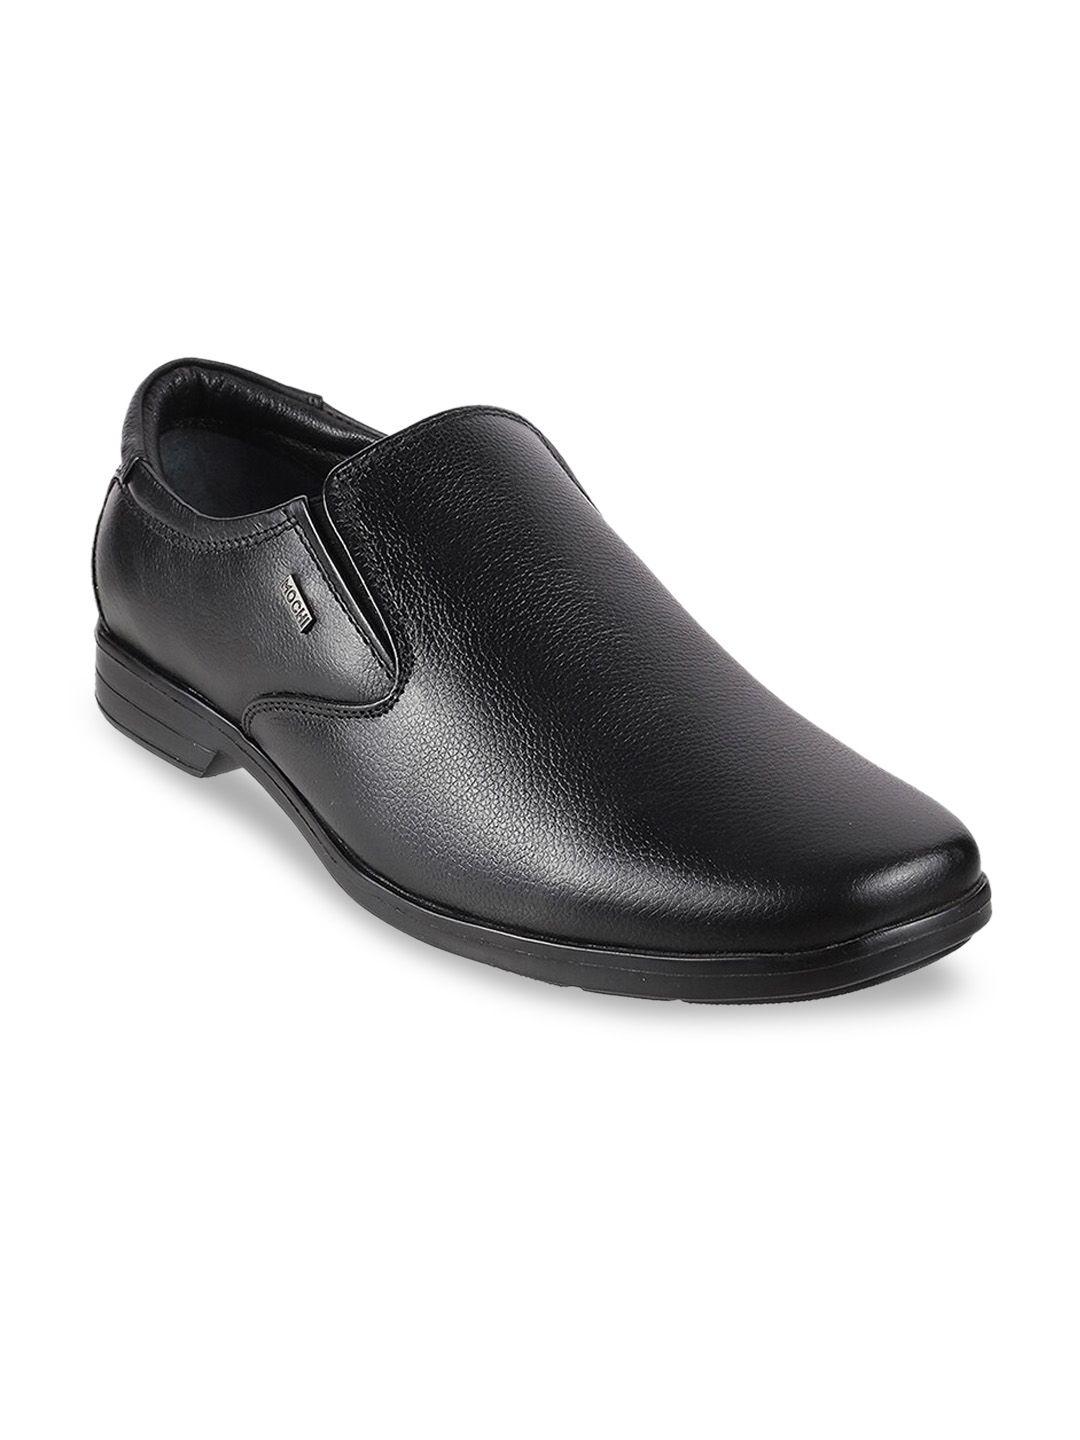 metro-men-black-solid-leather-formal-slip-on-shoes